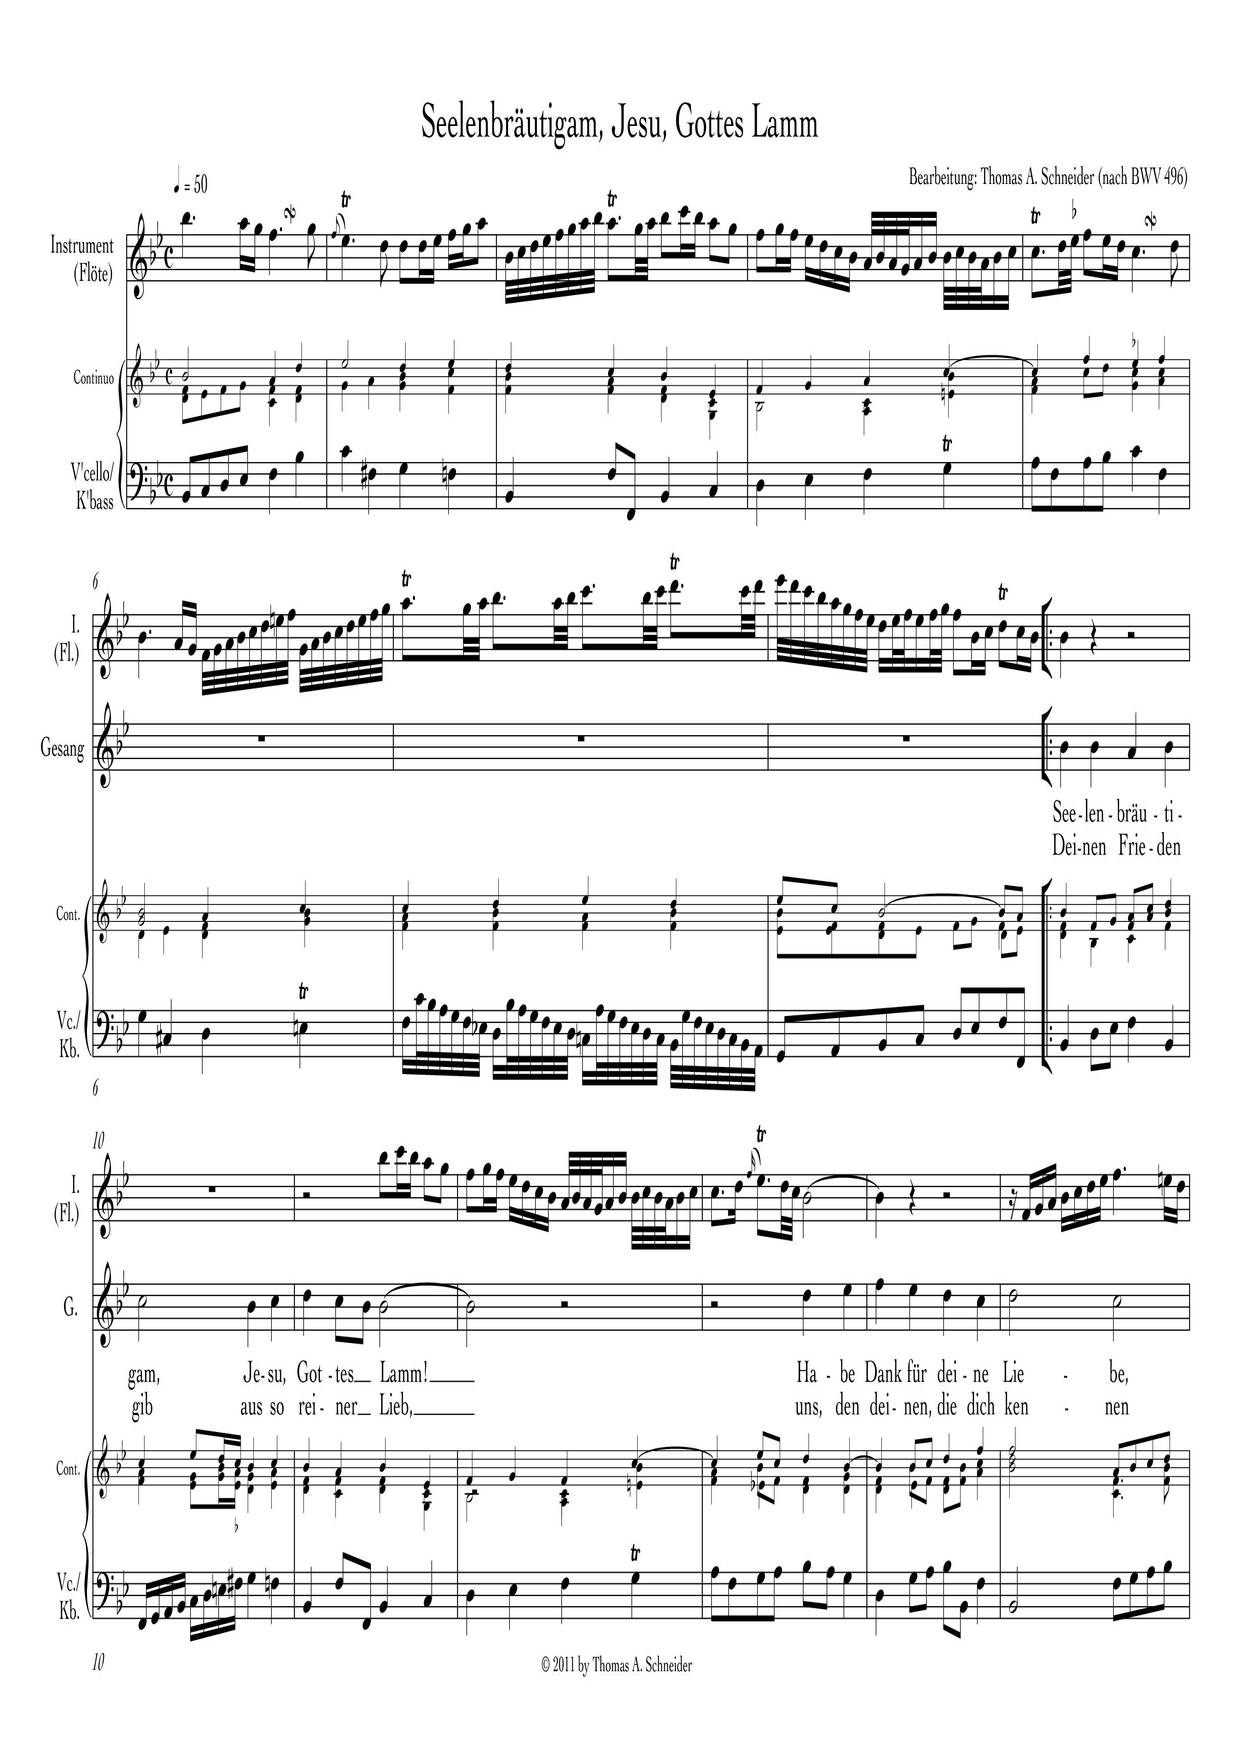 Seelen-Bräutigam, Jesu, Gottes Lamm, BWV 496ピアノ譜